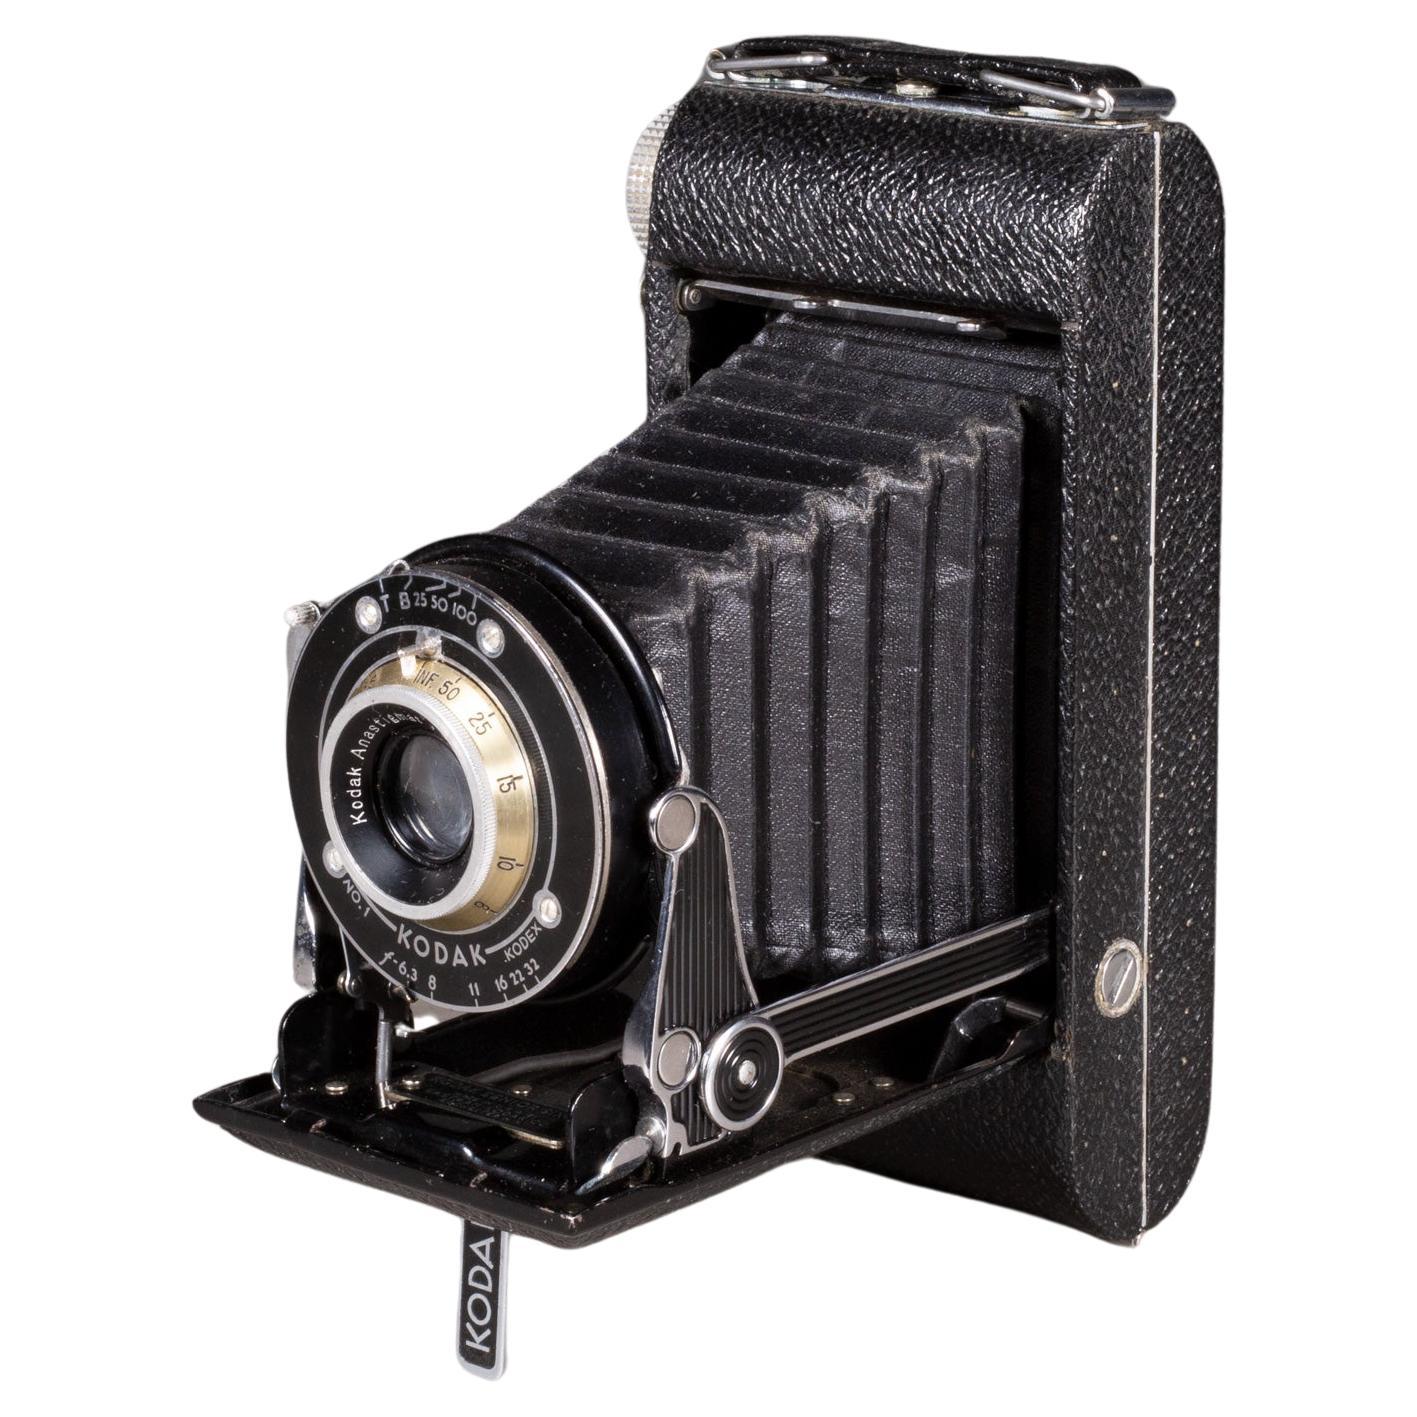 Eastman Kodak ancien appareil photo de poche « N° 1 Kodak » pliant c.1909-1920 en vente